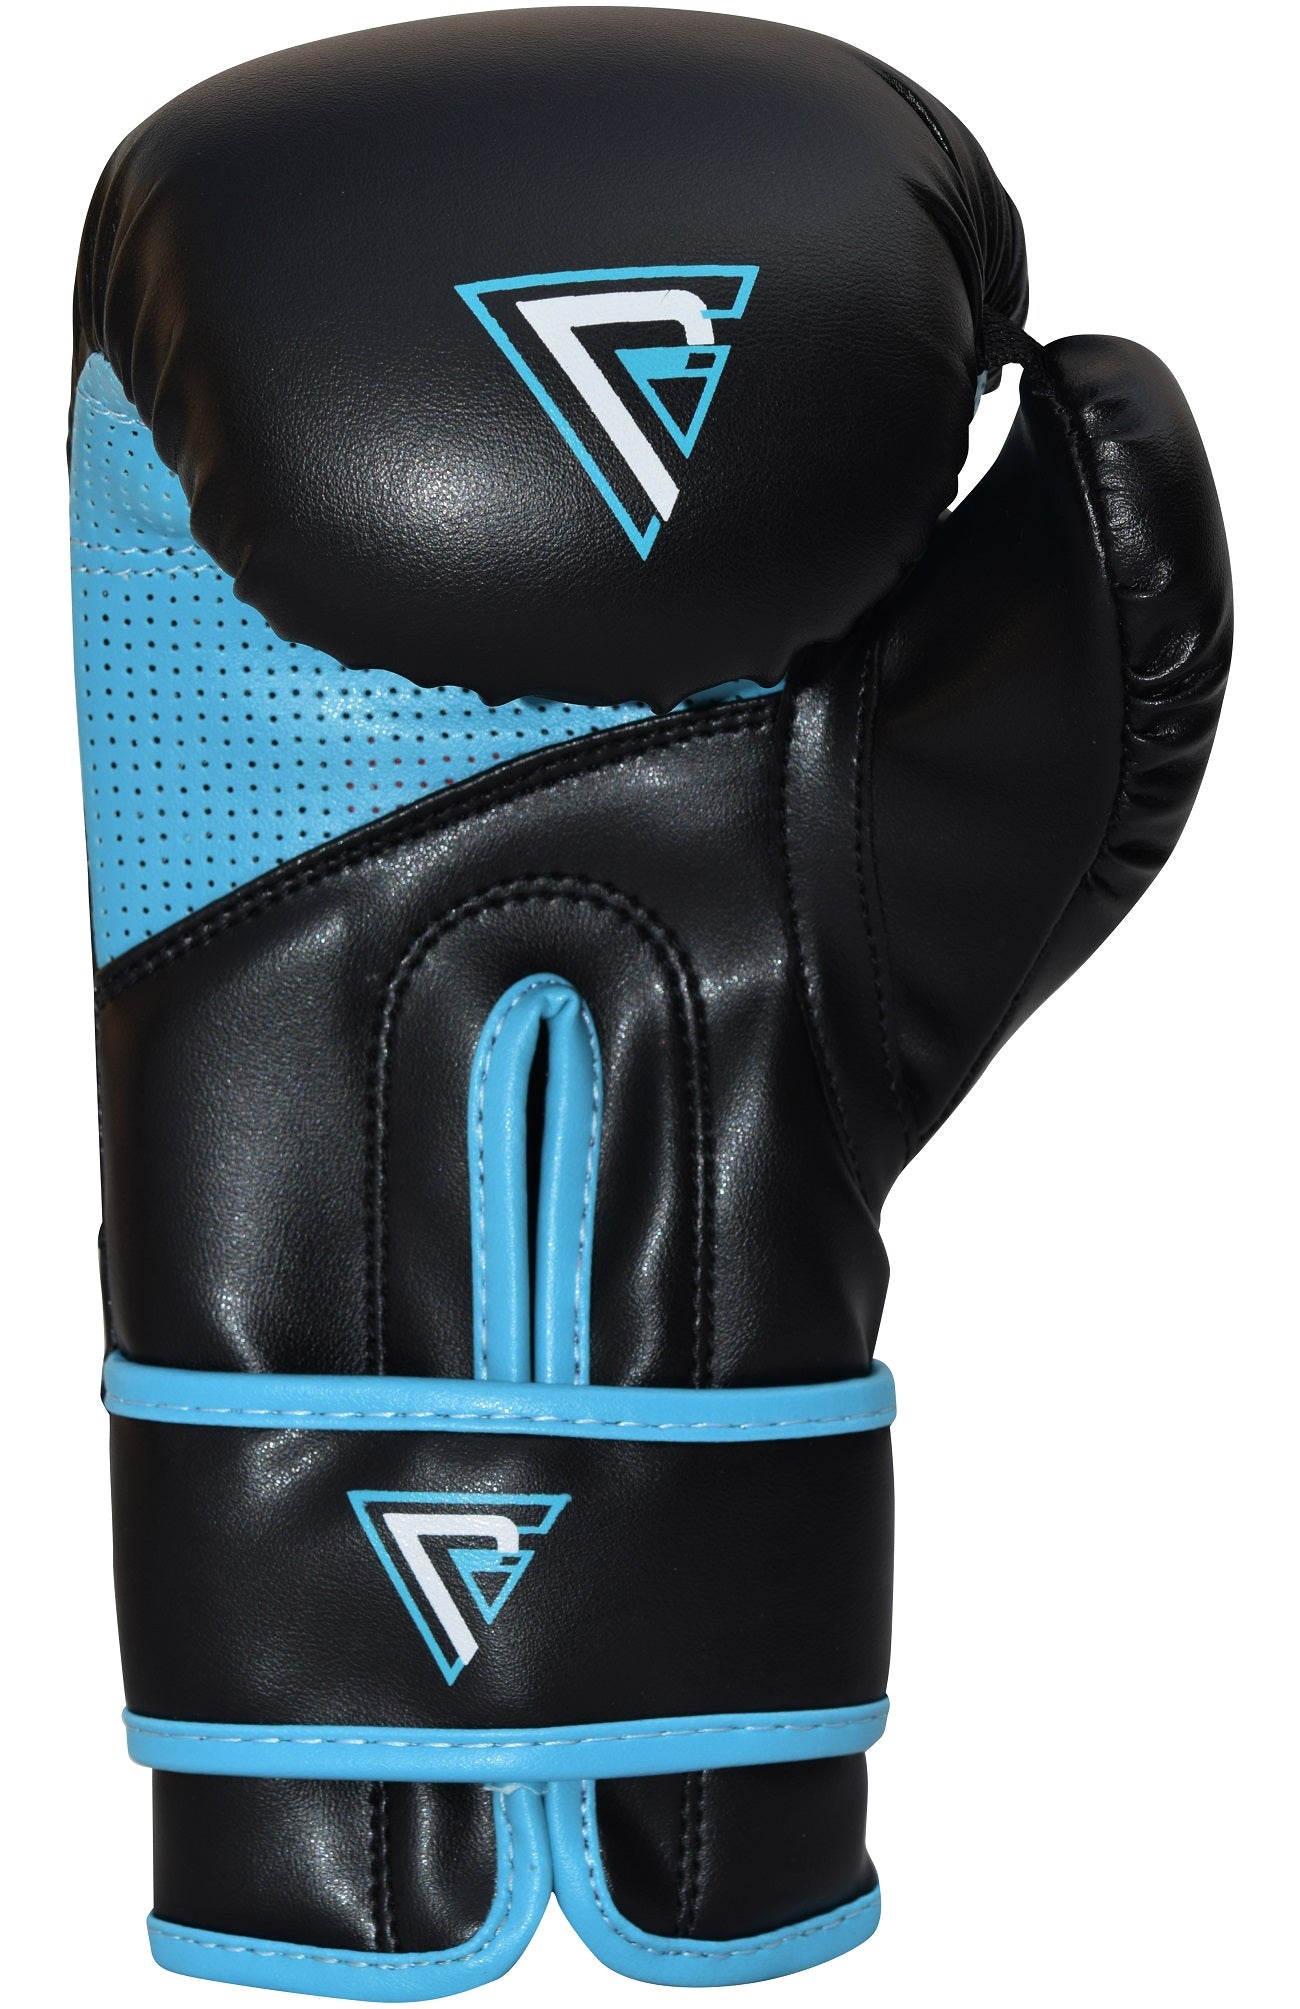 Kid's Boxing Gloves [Blue/Black]